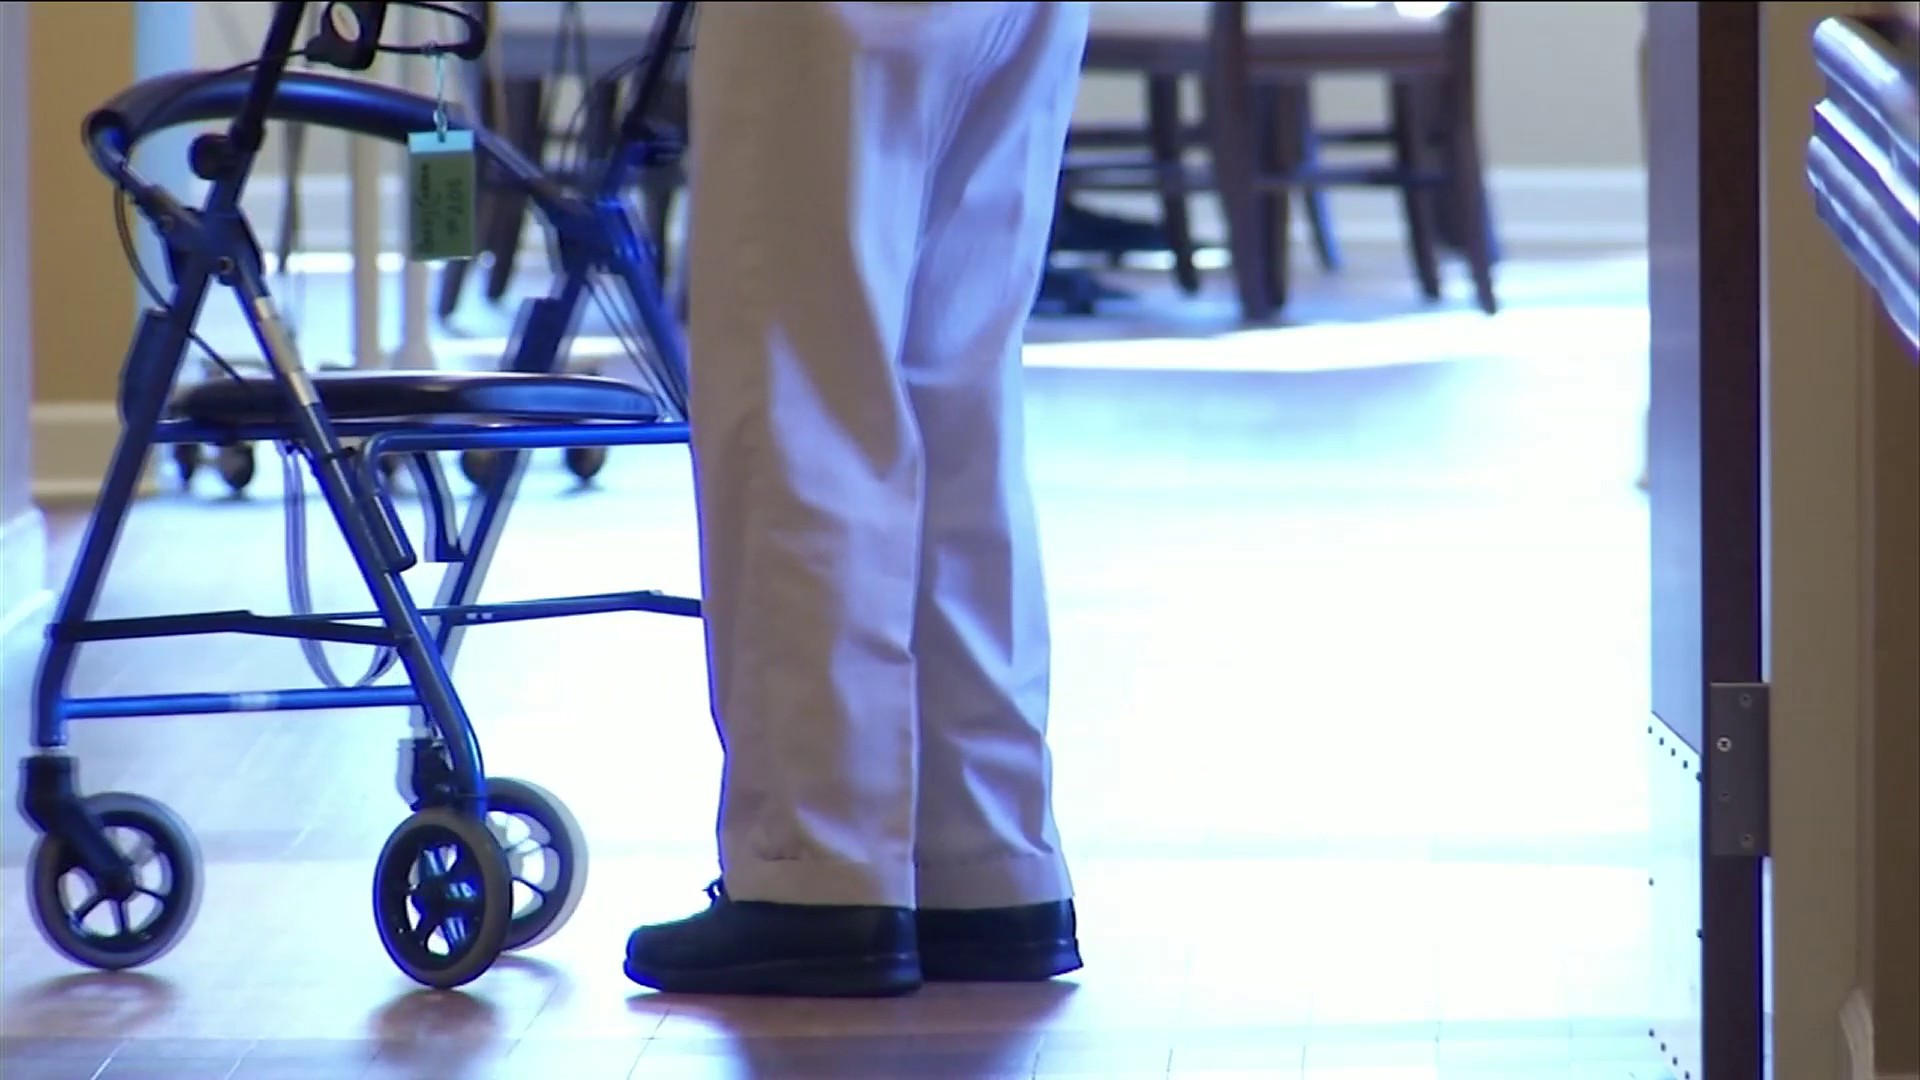 Download Florida Nursing Homes Facing Financial Crisis